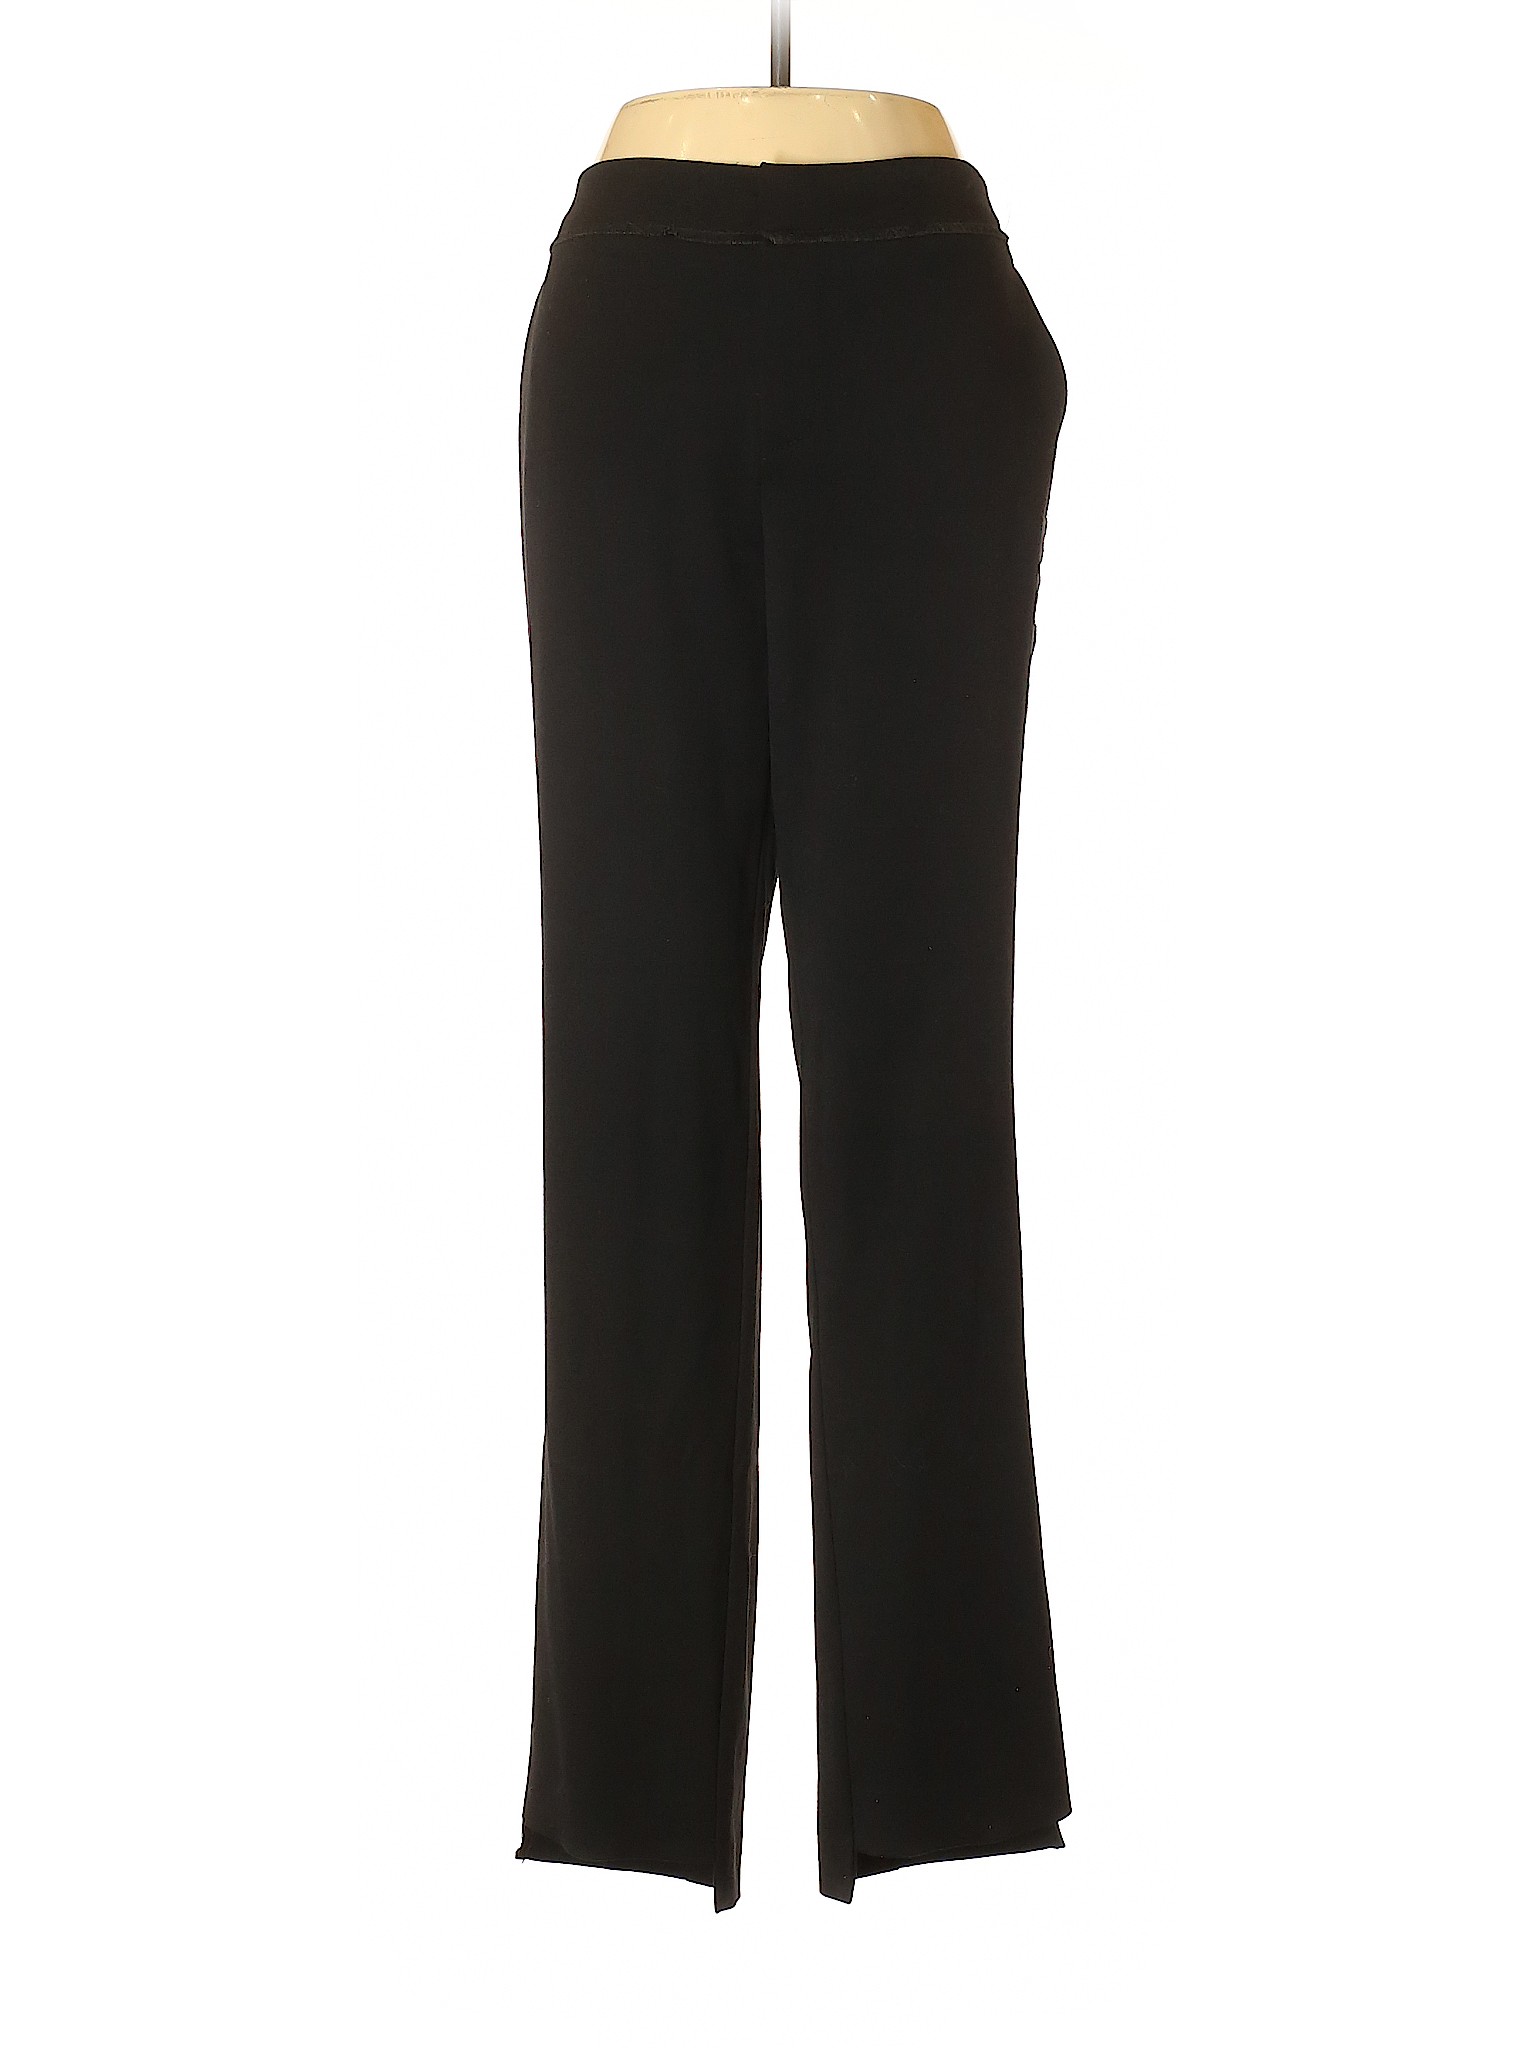 RACHEL Rachel Roy Women Black Dress Pants 8 | eBay